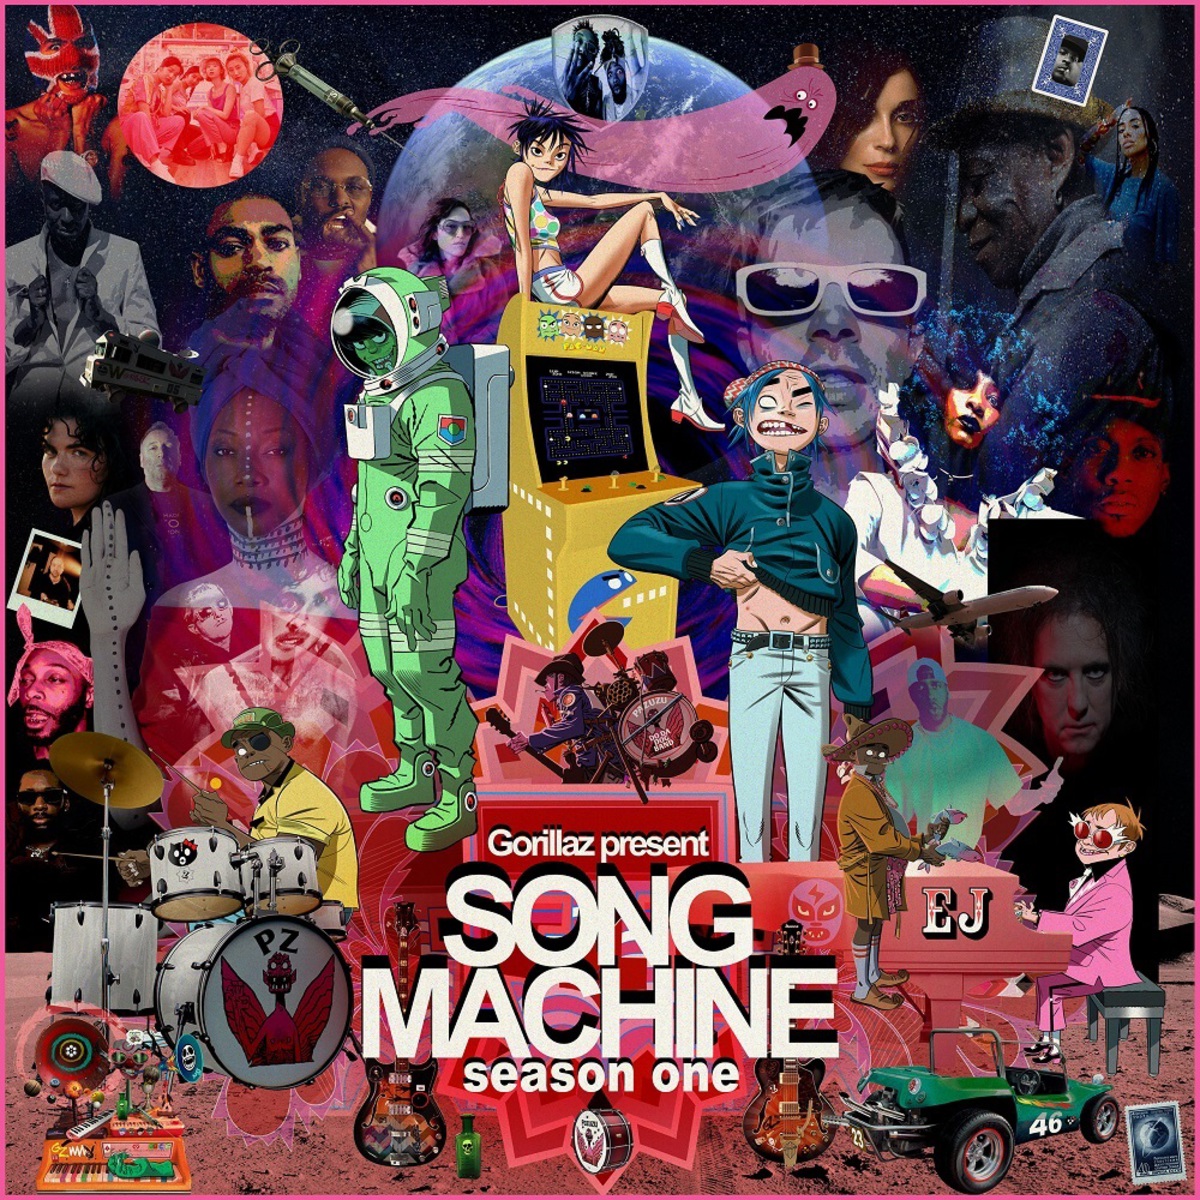 Gorillaz ニュー アルバム Song Machine Season One Strange Timez 10 23リリース Beck St Vincent Georgiaらに加え日本からchaiも参加